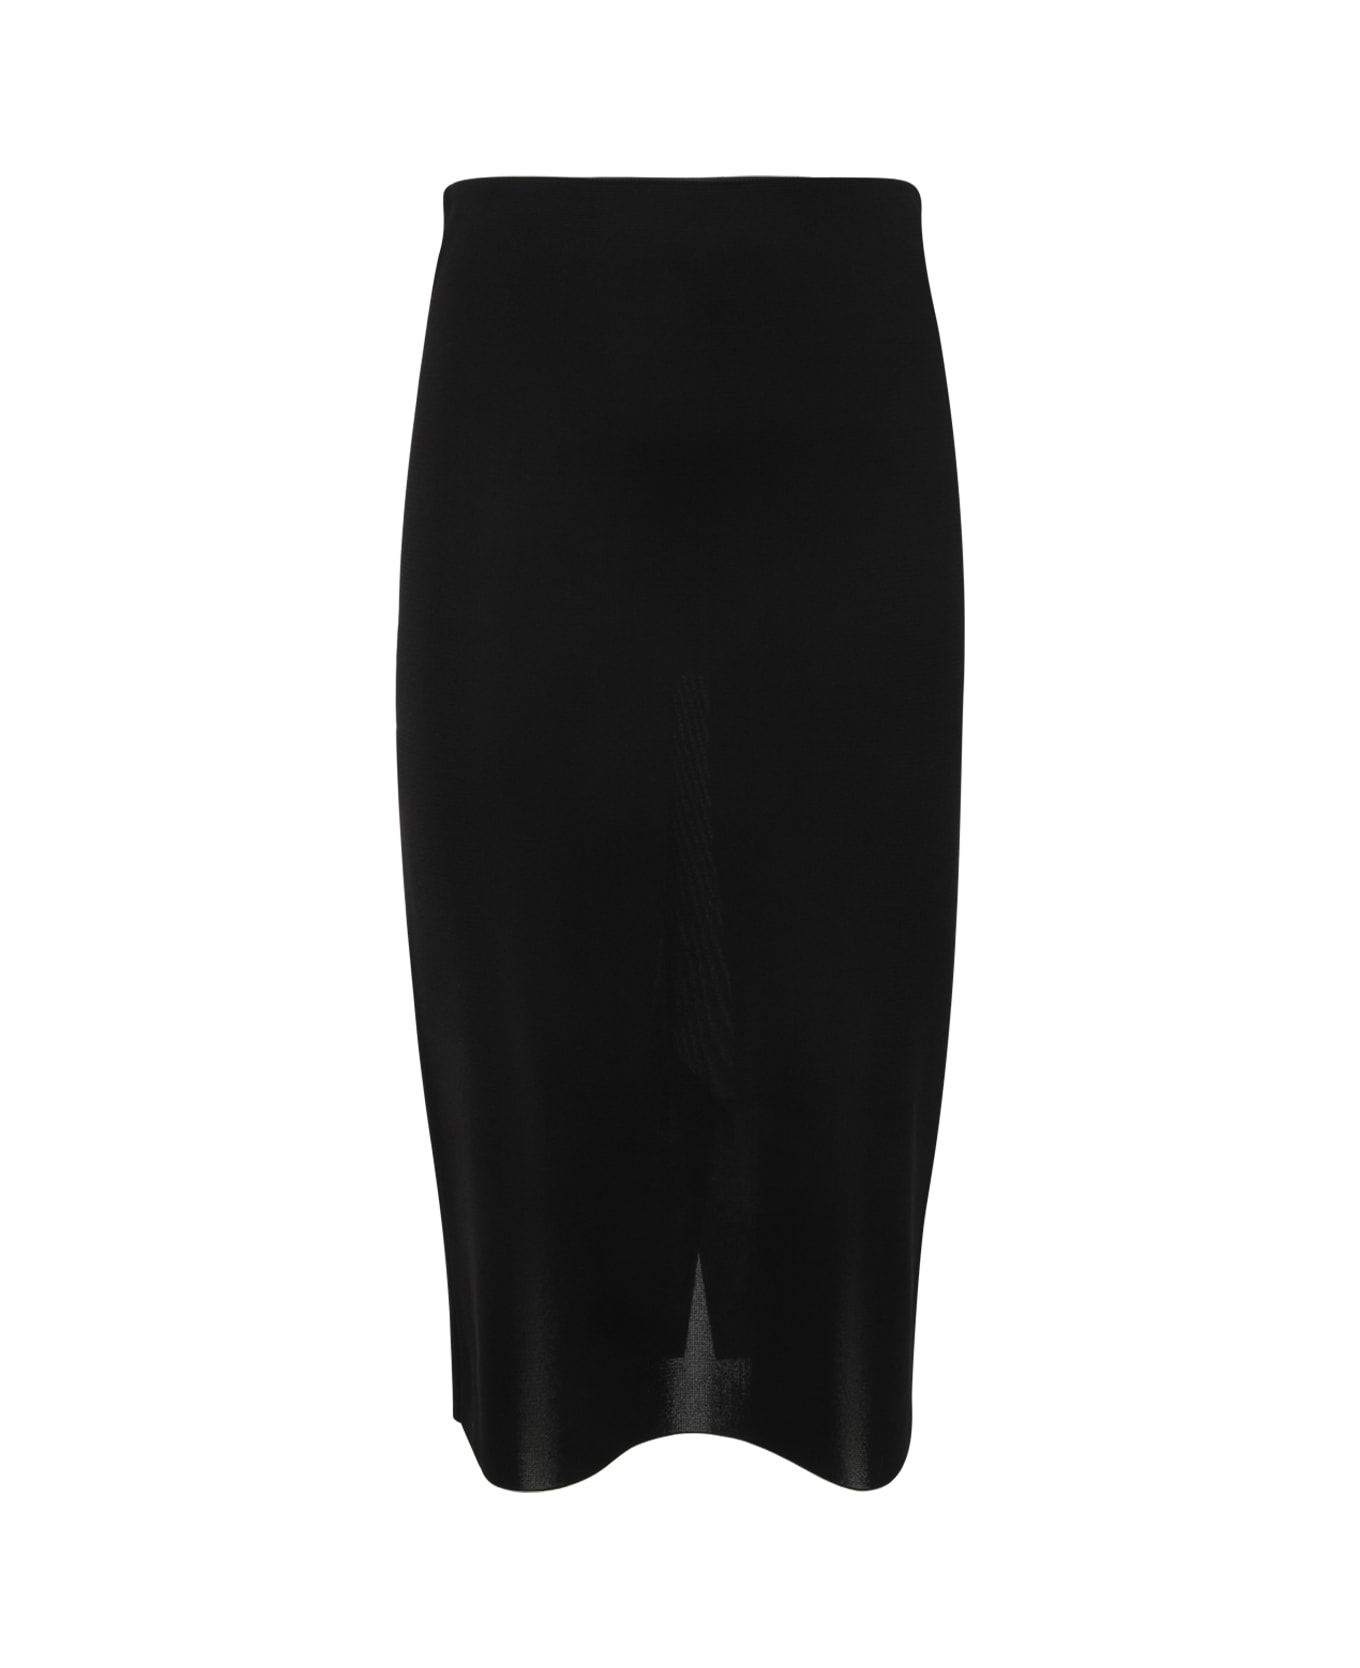 Tom Ford Knitwear Skirt - Black